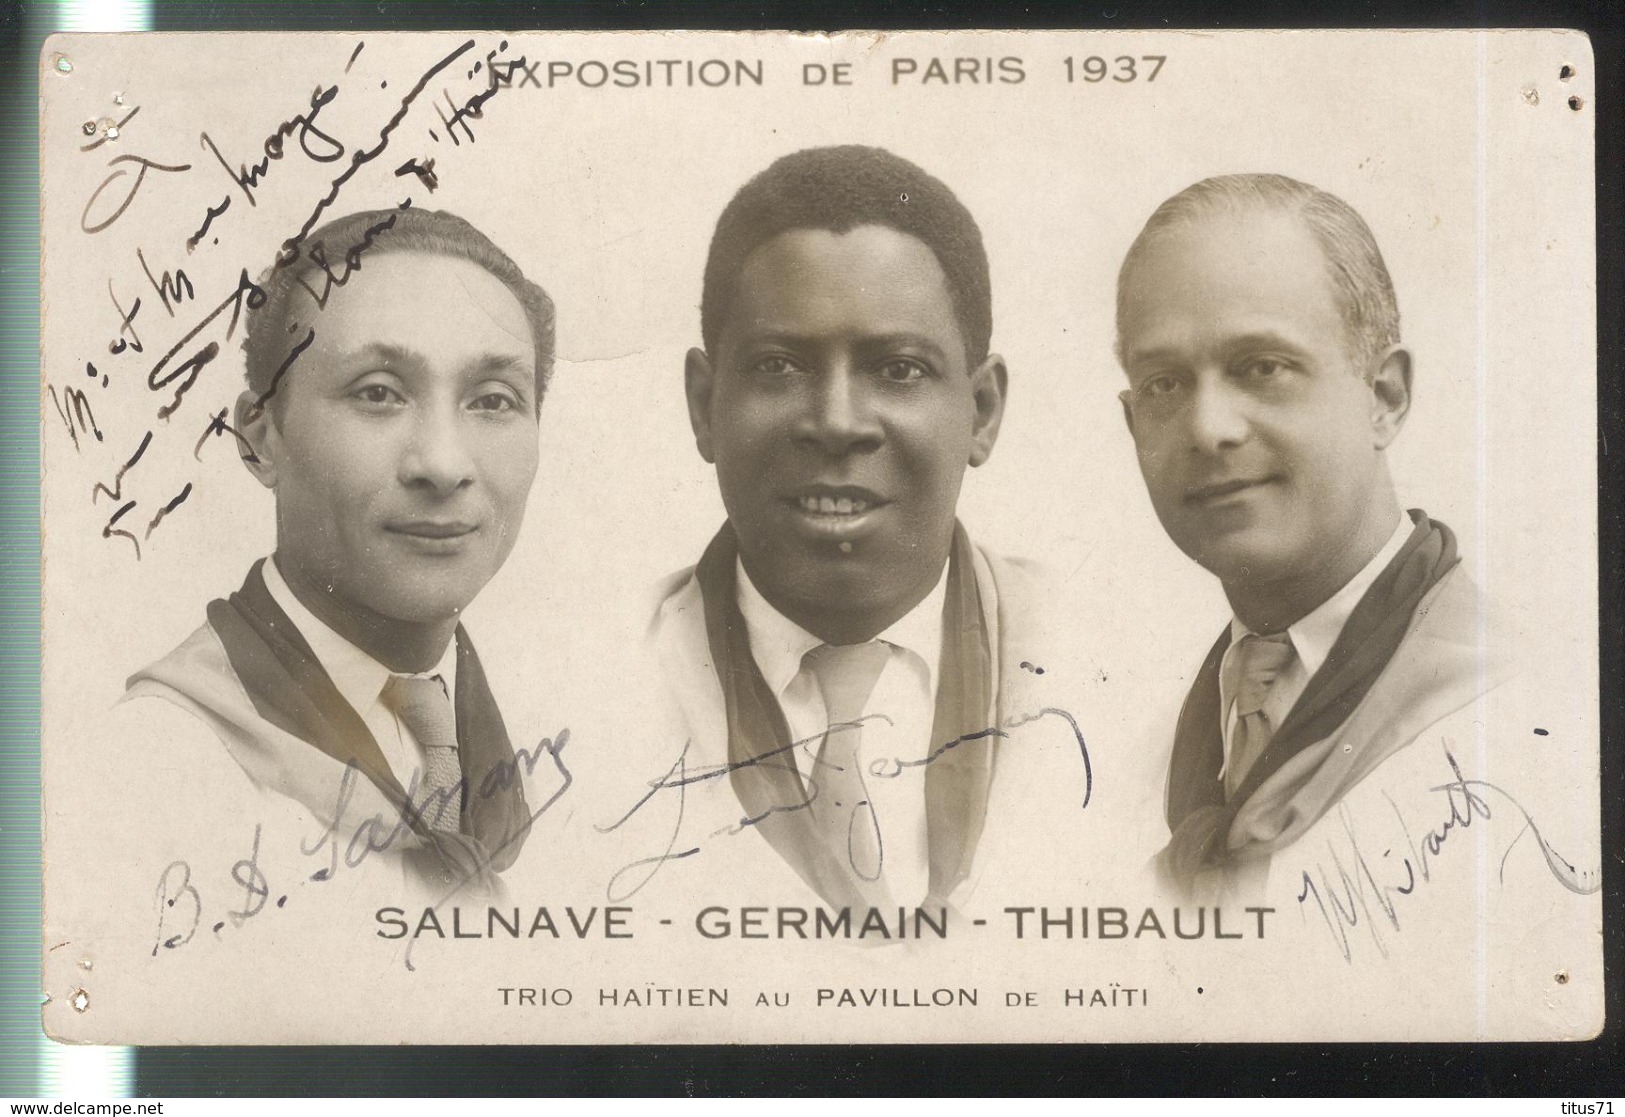 CPA Paris - Trio Haïtien Au Pavillon De Haïti - Salvane Germain Thibault - Exposition De Paris 1937 - Exhibitions